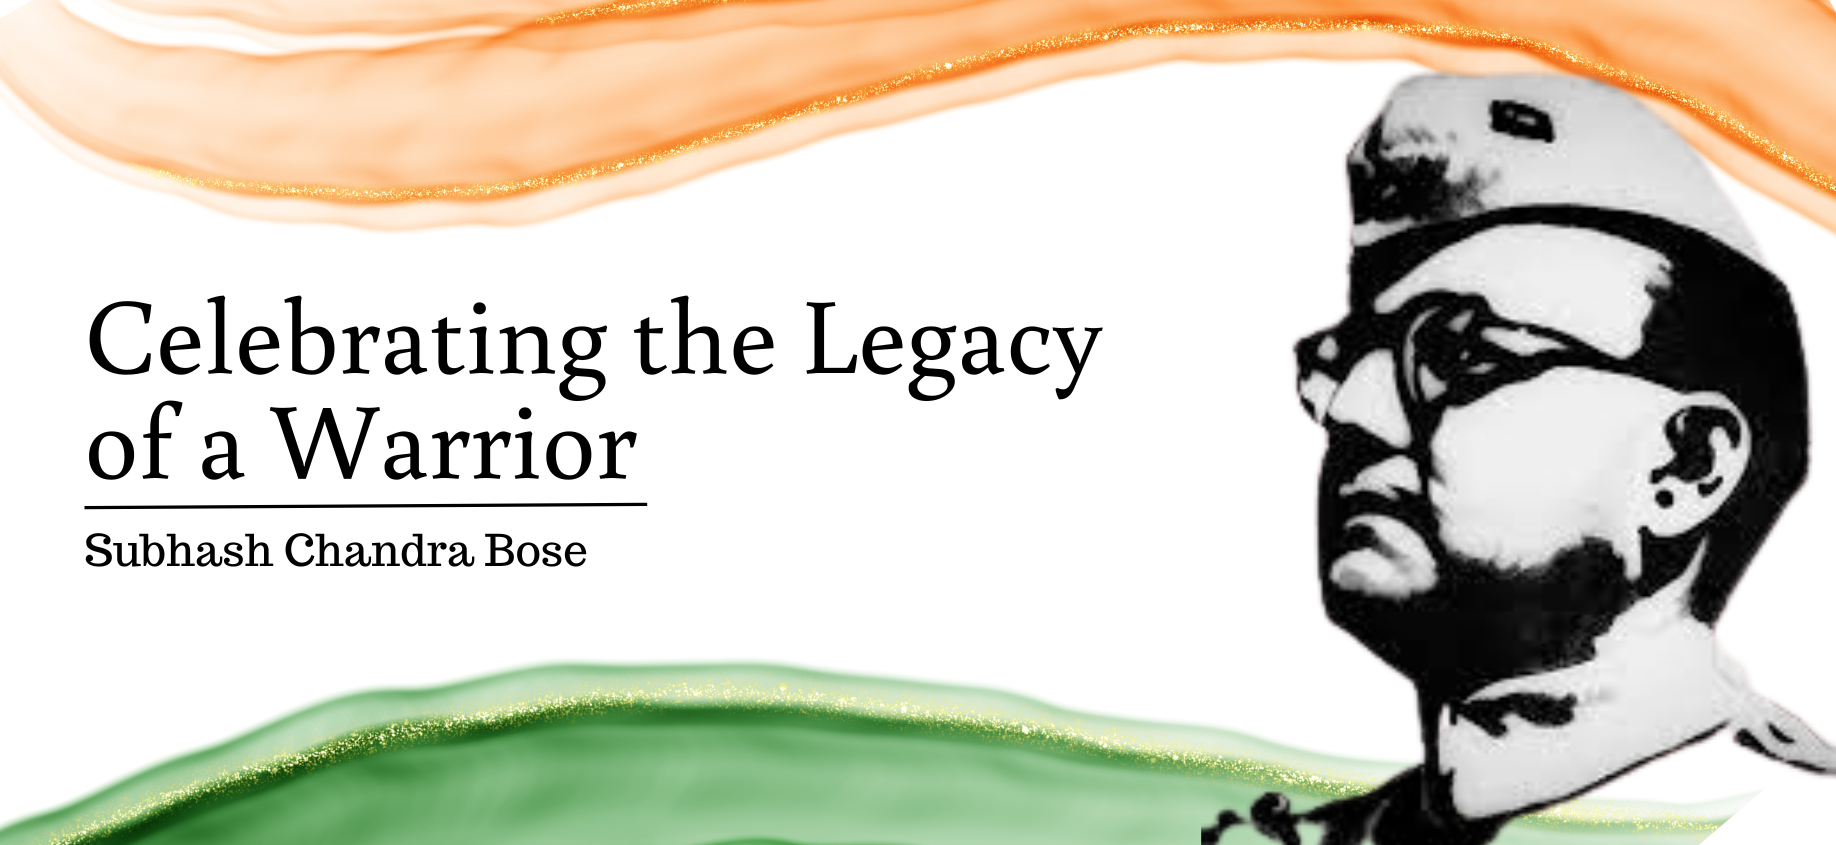 Subhash Chandra Bose: The Firebrand Freedom Fighter